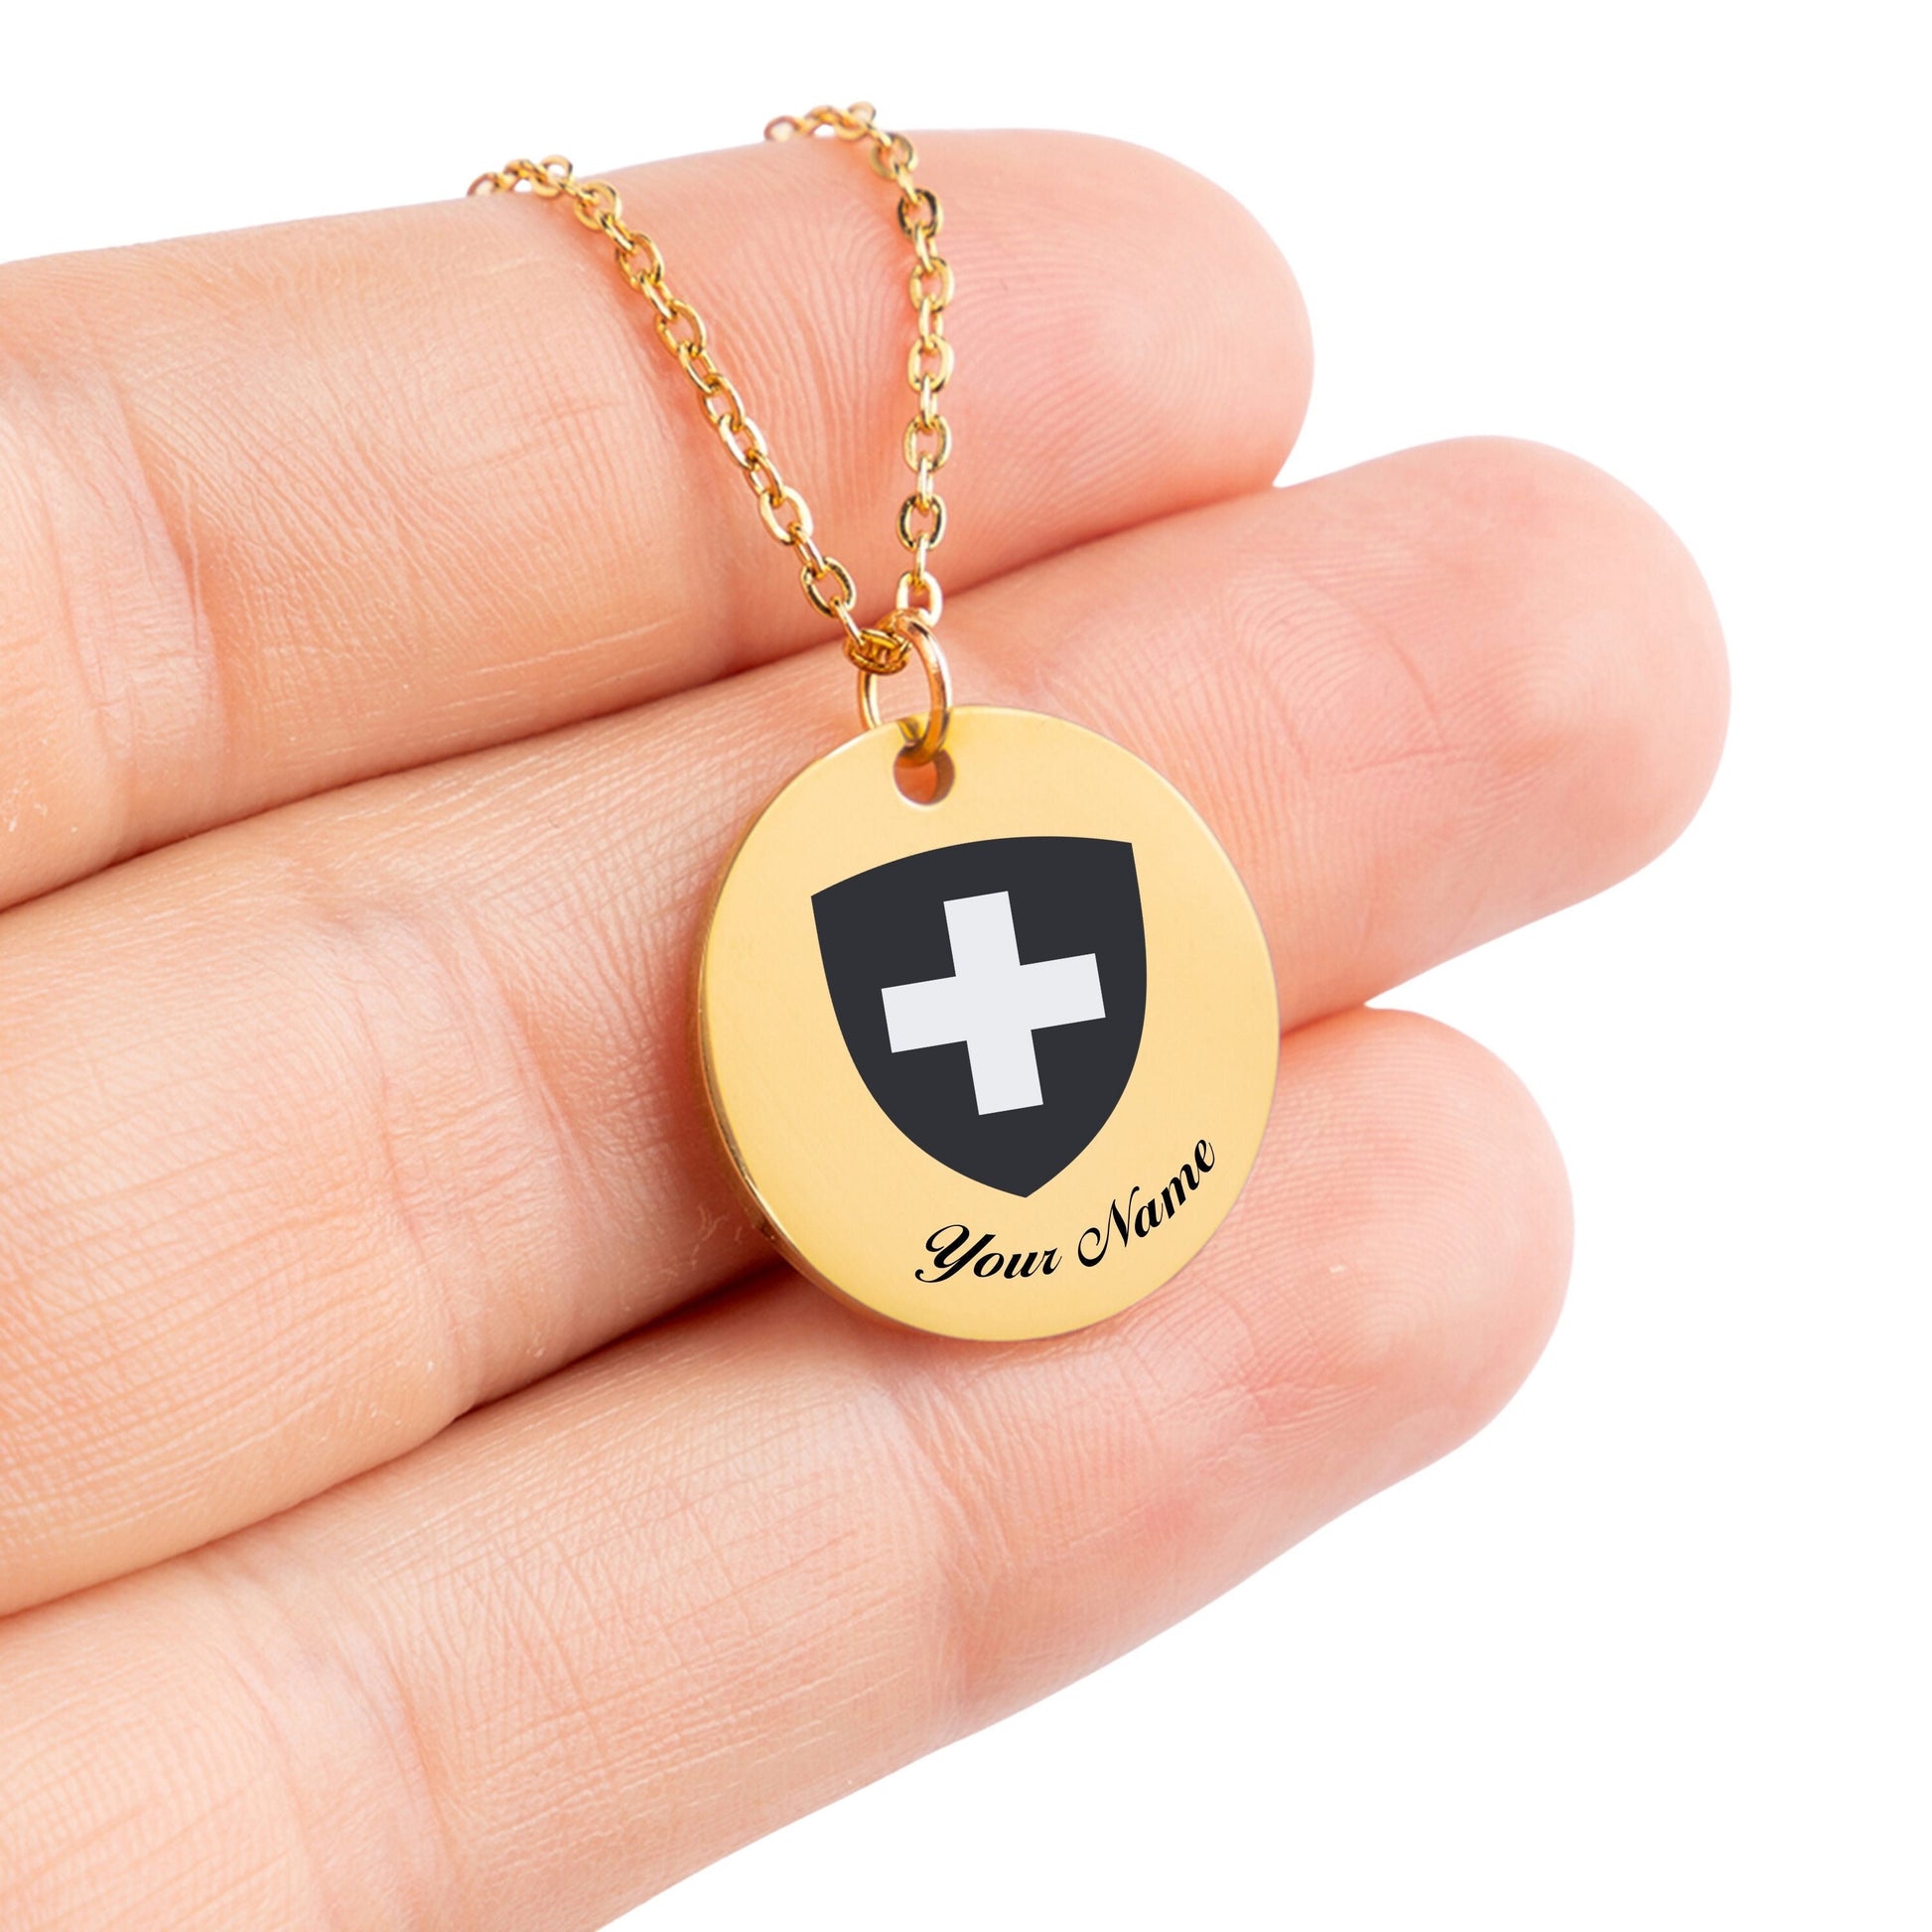 Switzerland National Emblem Necklace - Personalizable Jewelry